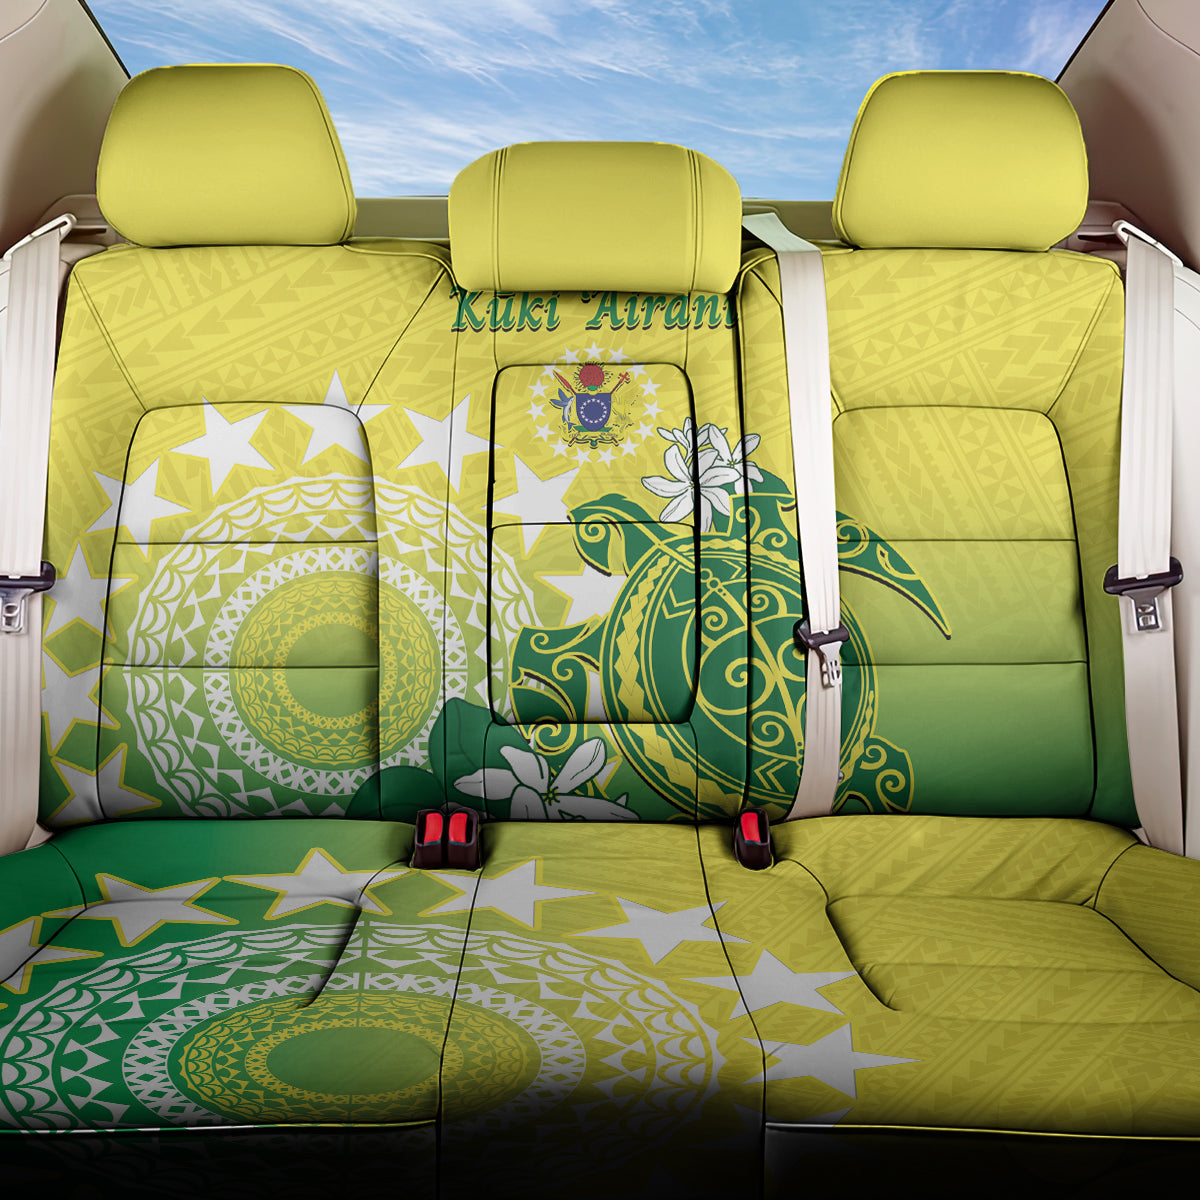 Cook Islands Independence Day Back Car Seat Cover Kuki Airani Tiare Maori Polynesian Pattern - Green